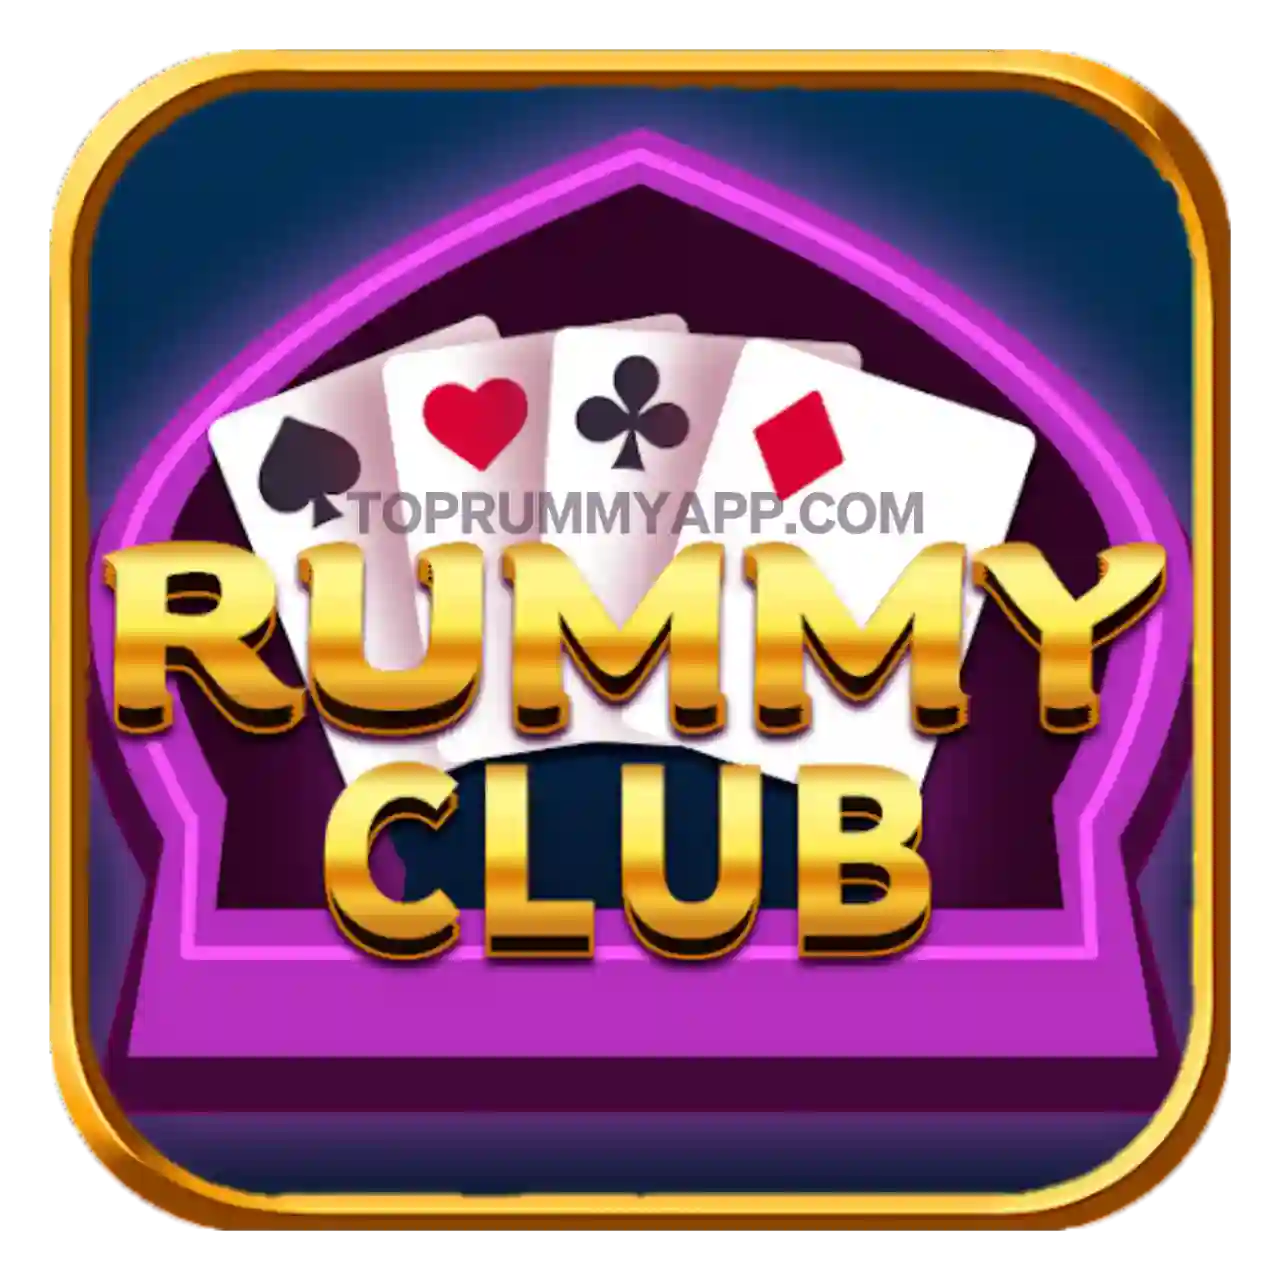 New Rummy Club App Download - Top 25 Rummy App List 10 Bonus